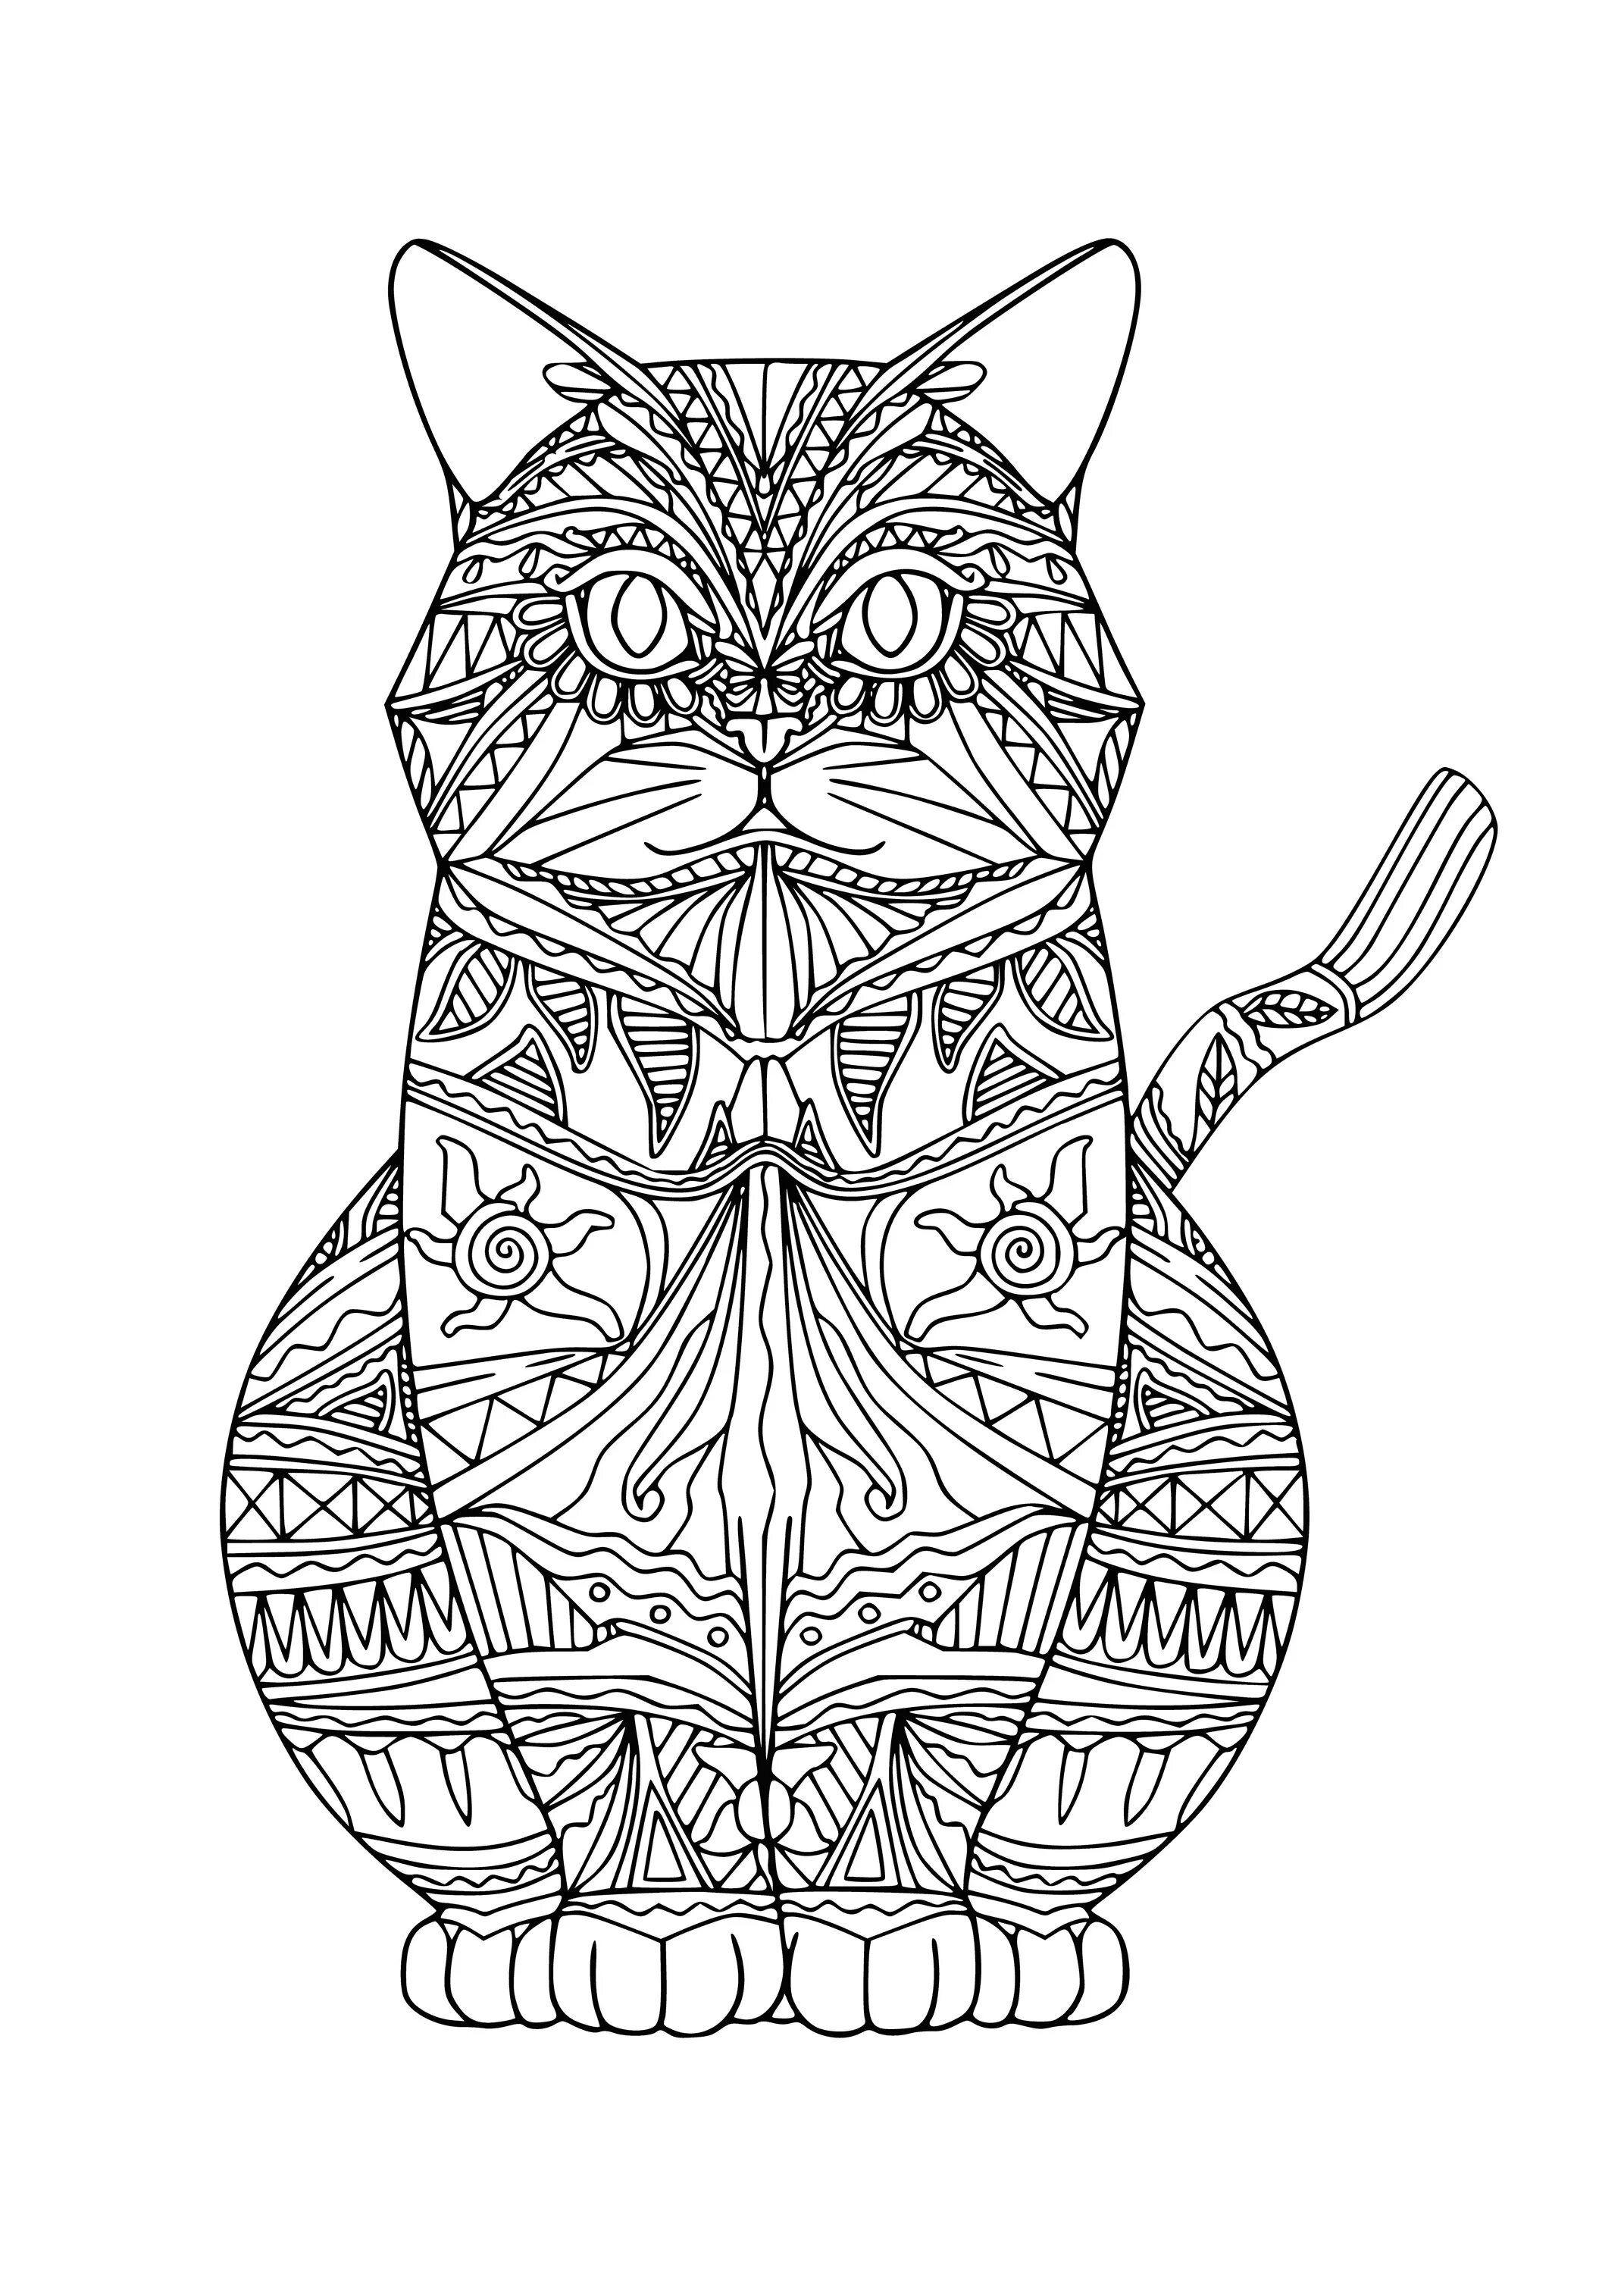 Coloring mandala of a bold cat